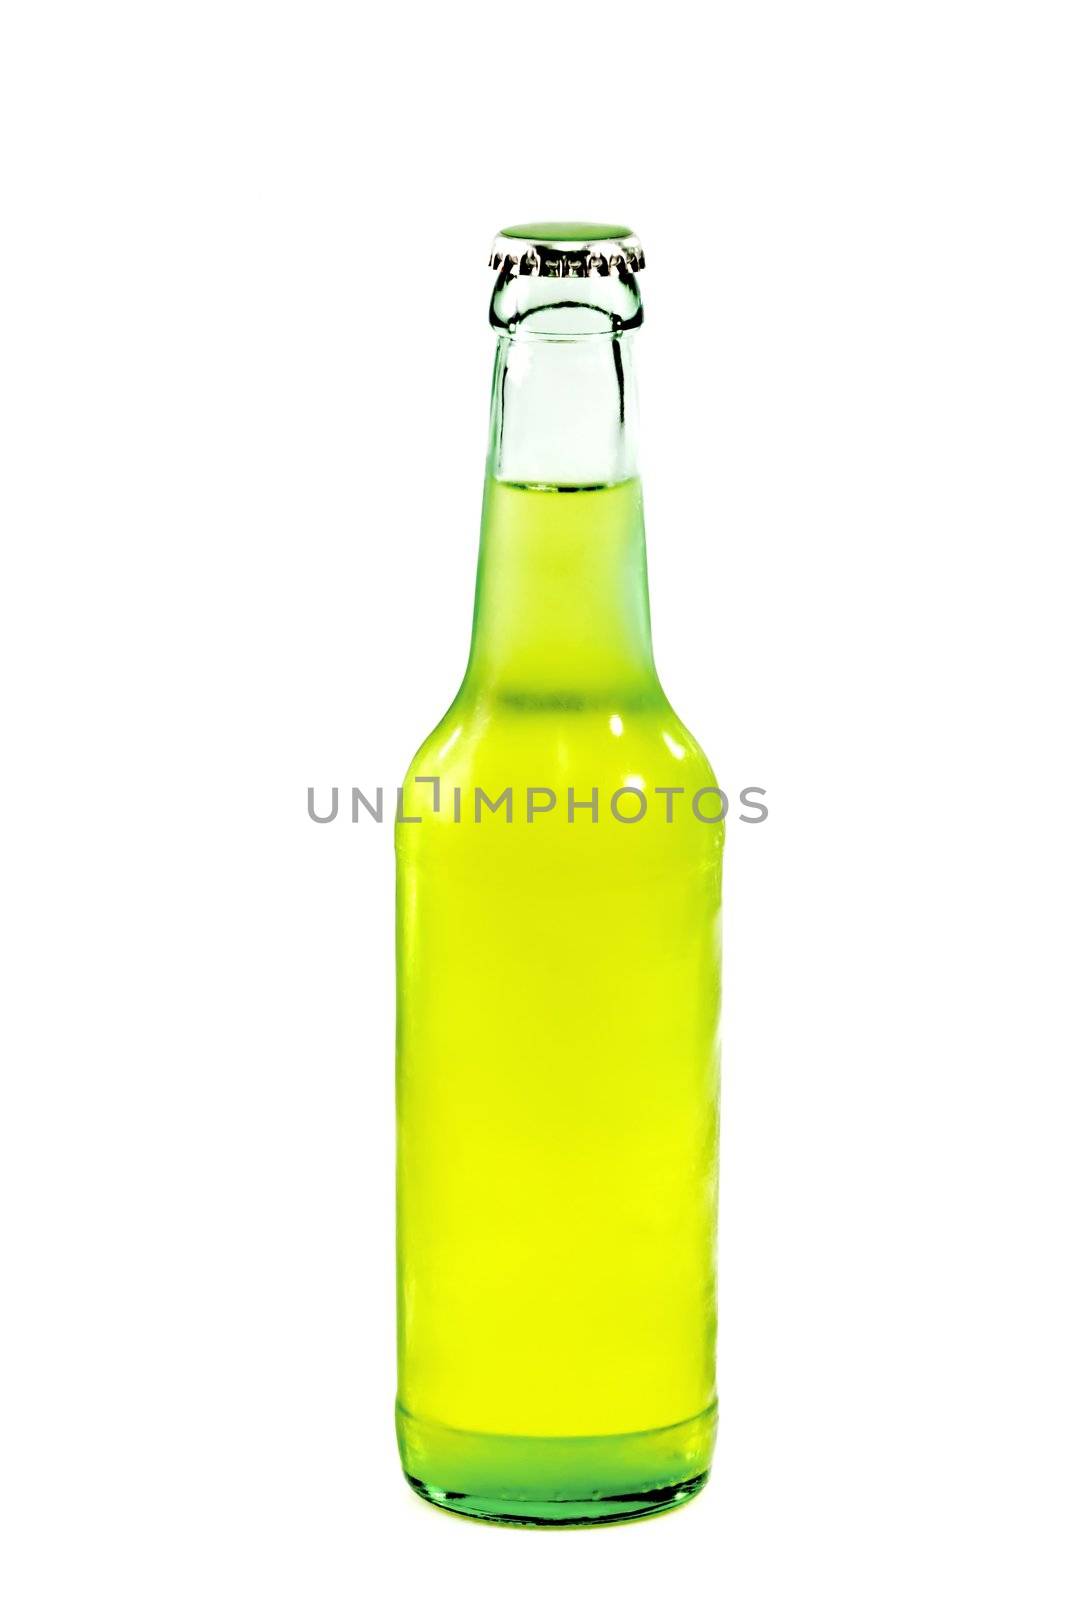 Lime Beer by Teamarbeit